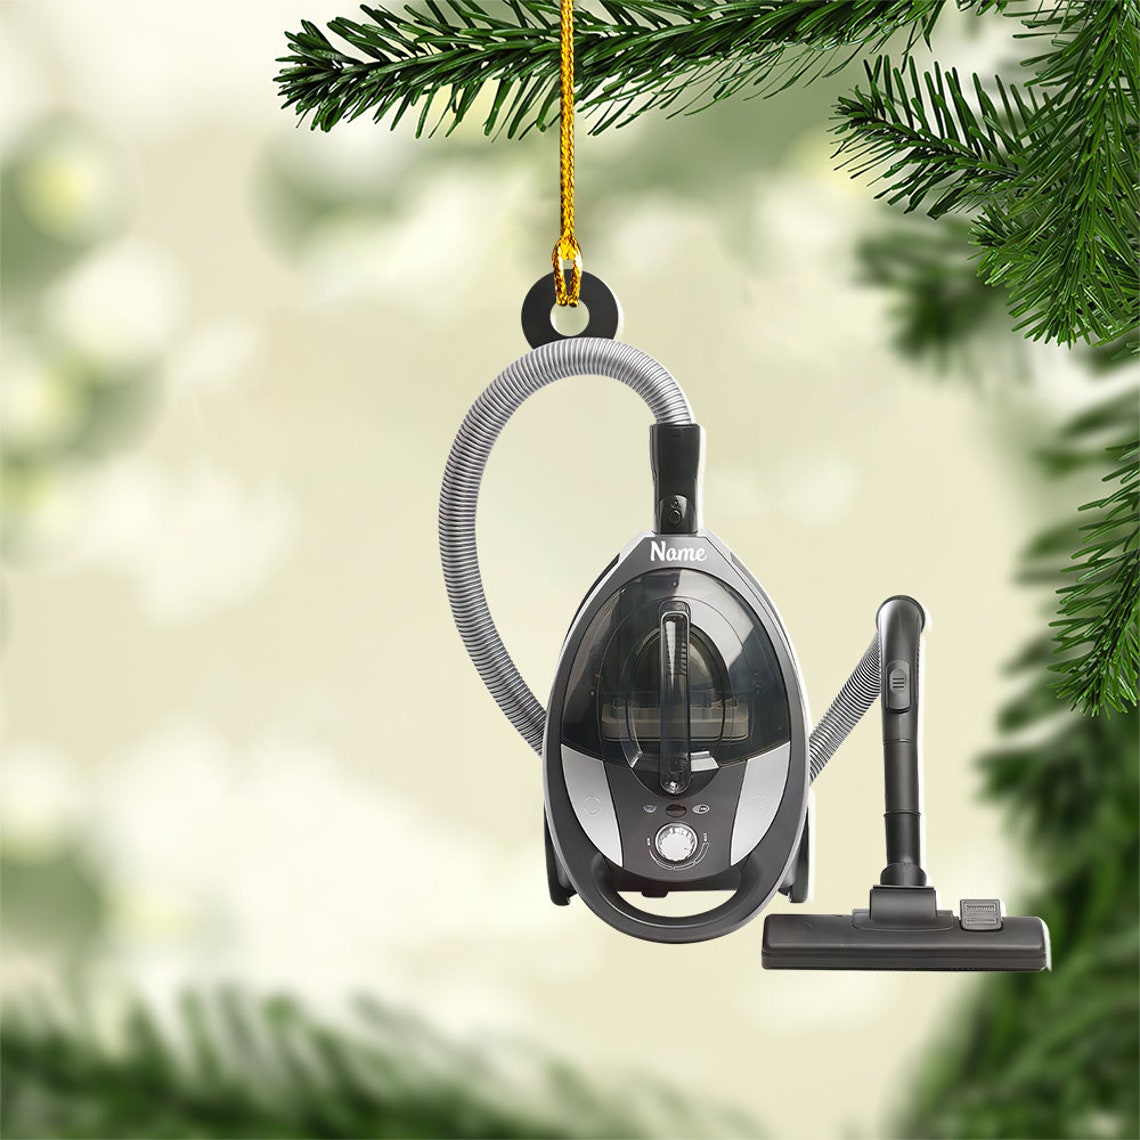 Vacuum Cleaner Christmas Ornament/ Love Vacuum Cleaner Ornament Decor/ Loved Vacuum Cleaner Hanging Ornament/ Lovers Gift